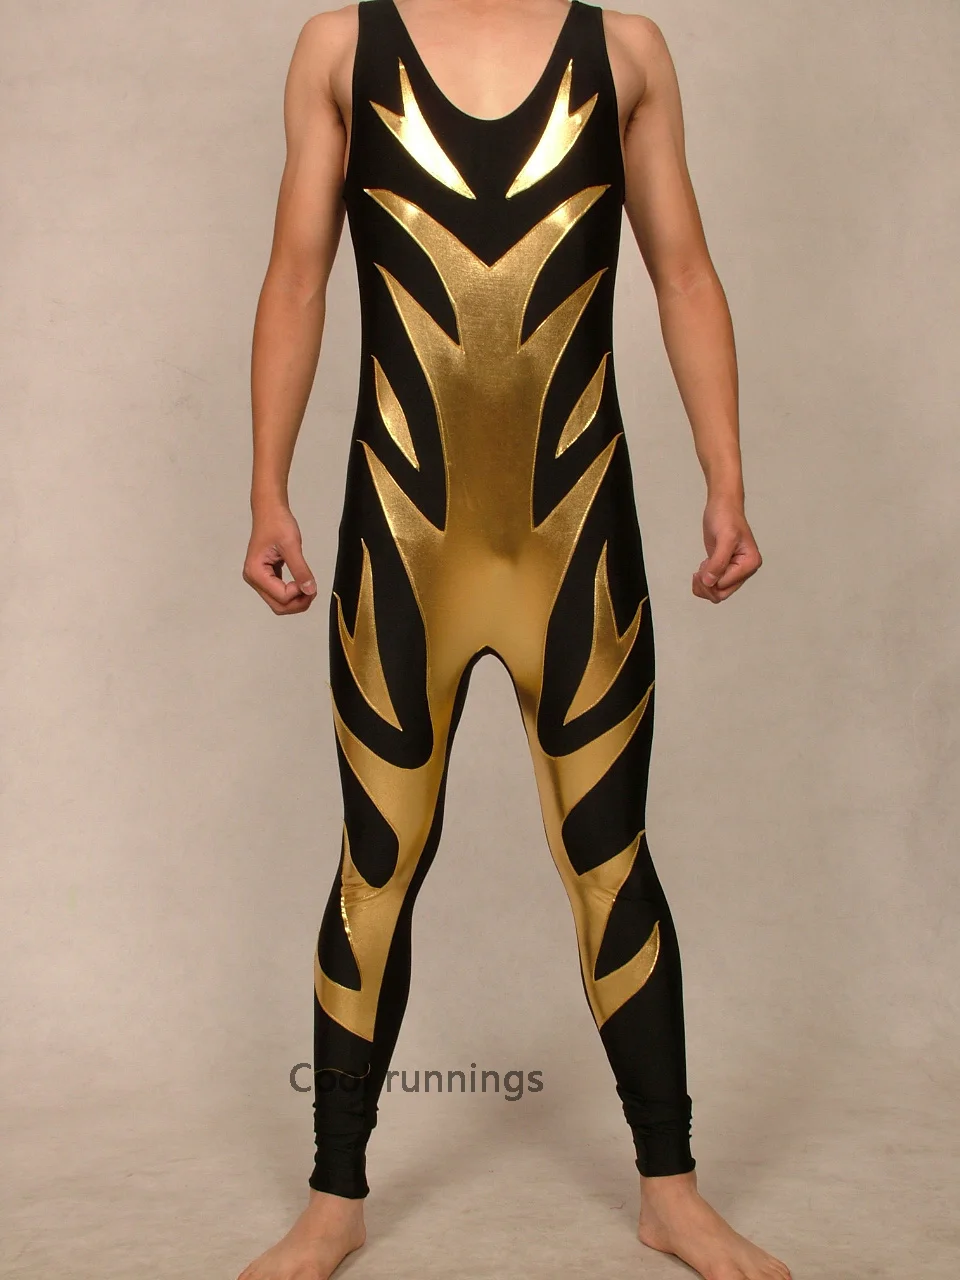 lycra spandex zentai costume metallic wrestling tights/pants Red Star size S-XXL 